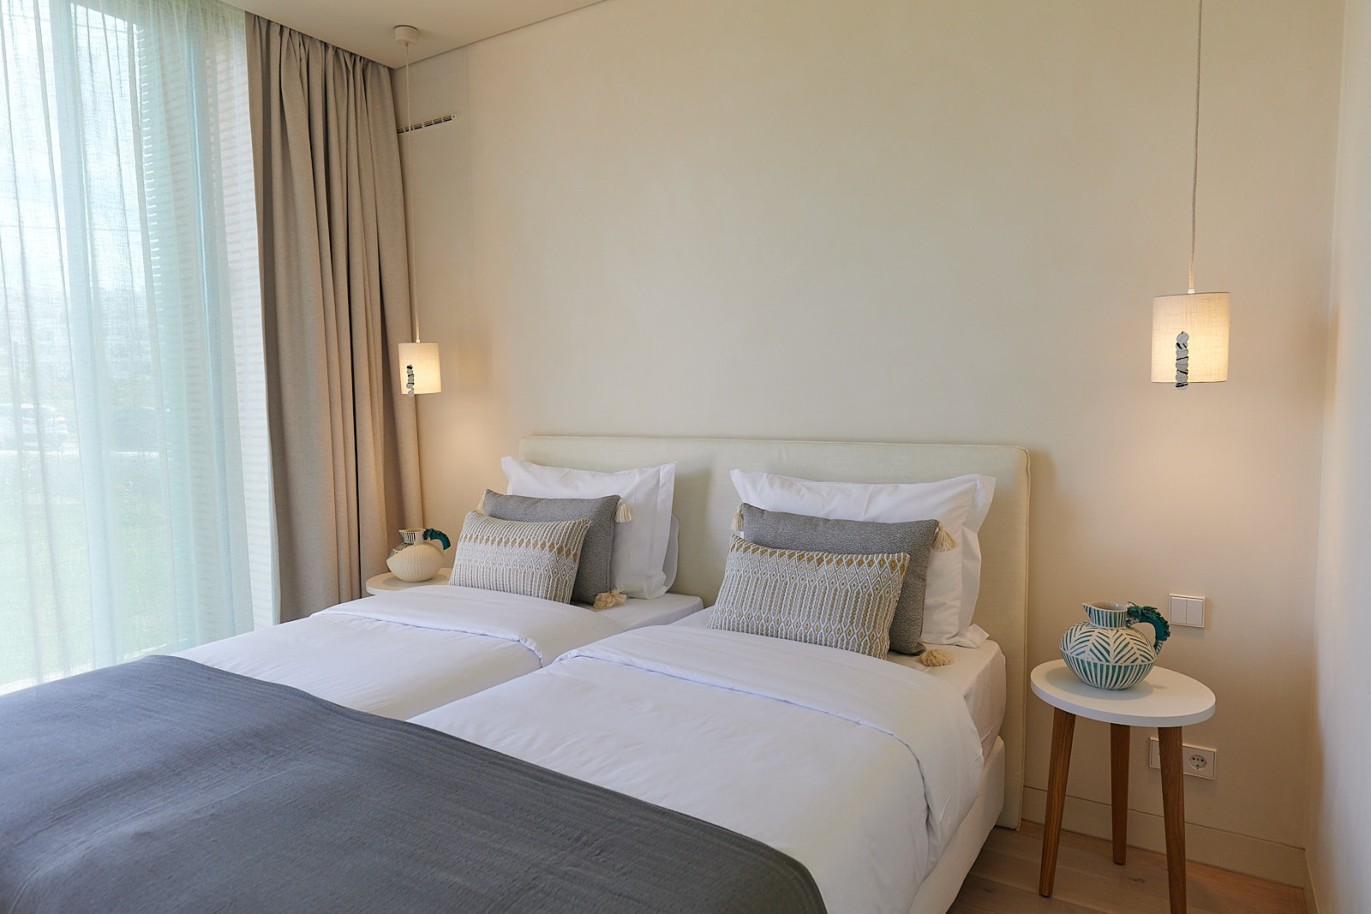 3 bedroom apartment in resort, for sale in Porches, Algarve_230719